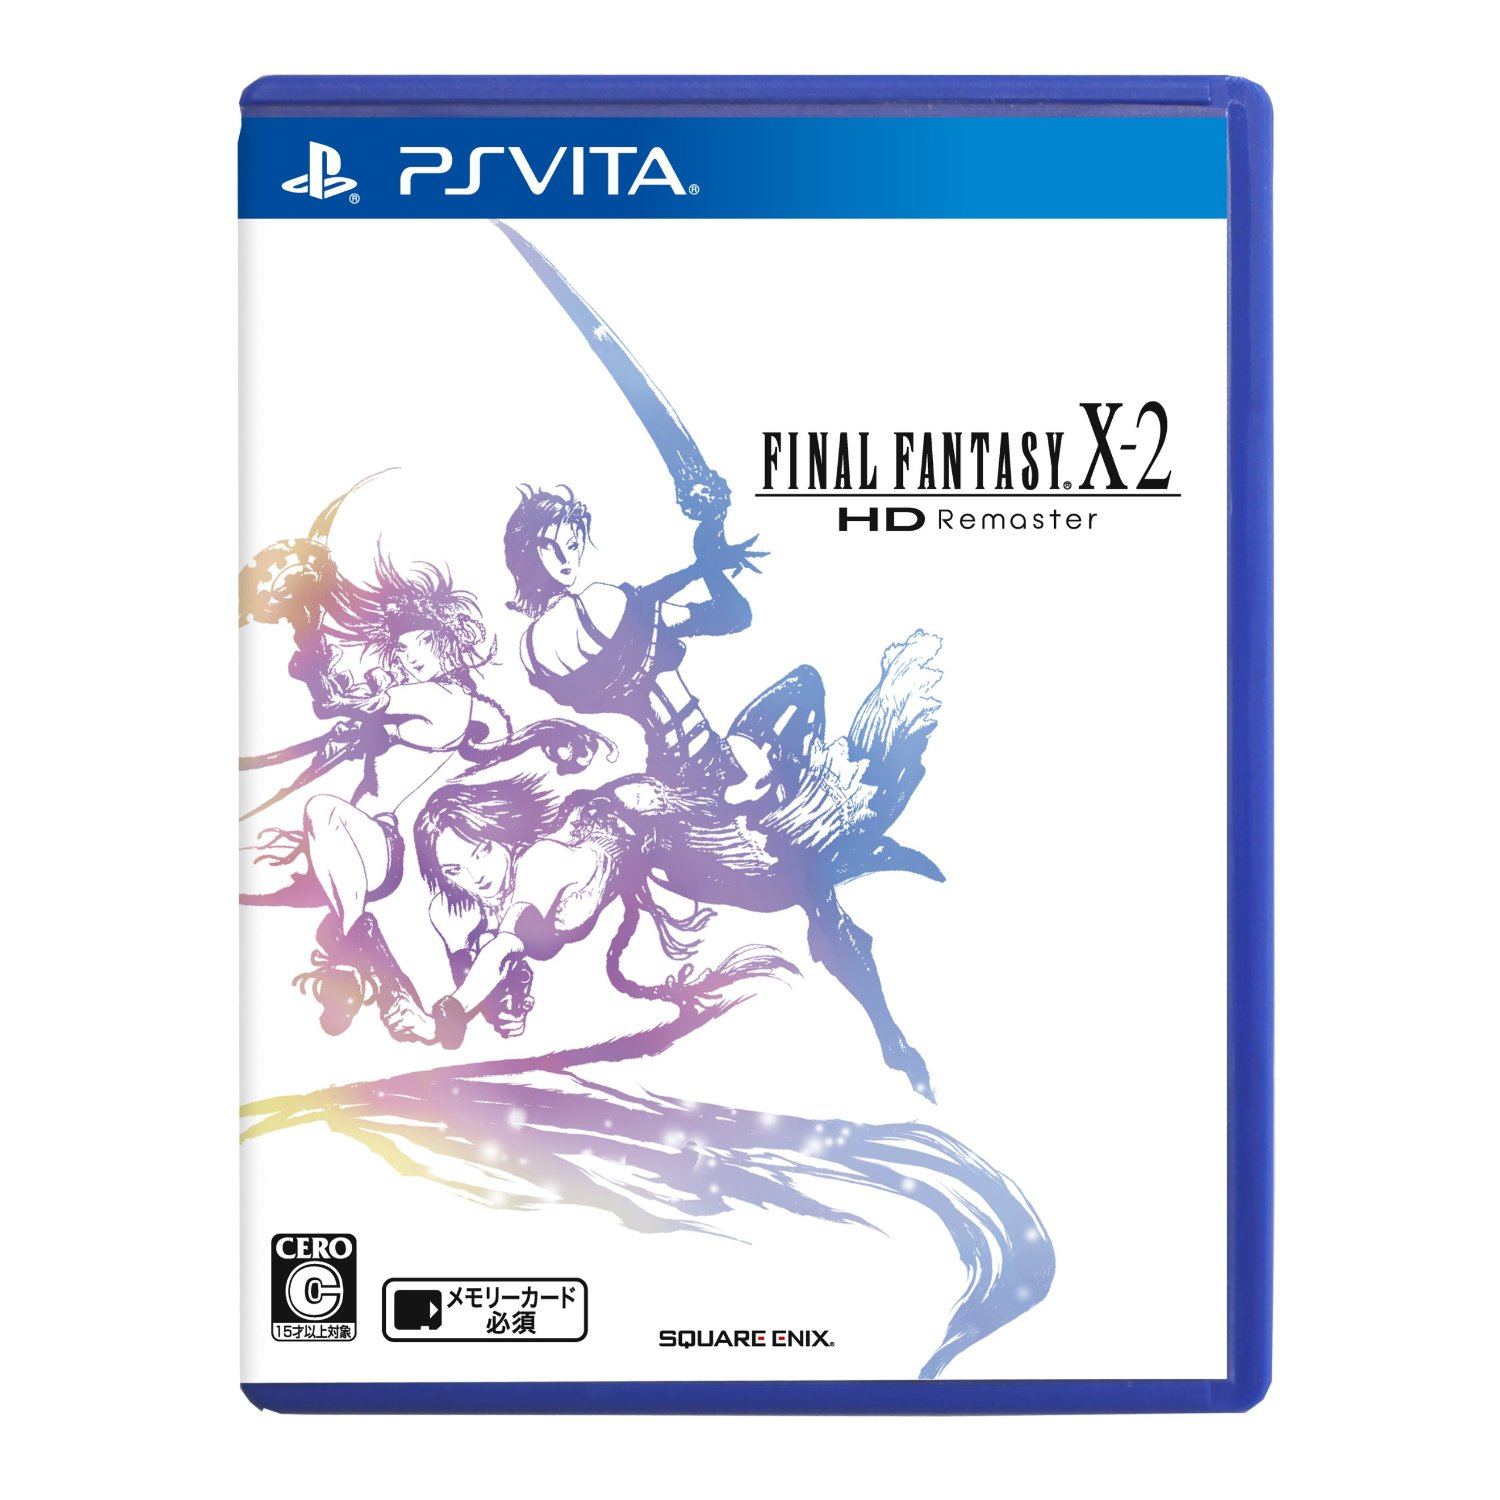 Final Fantasy X-2 HD Remaster for PlayStation Vita